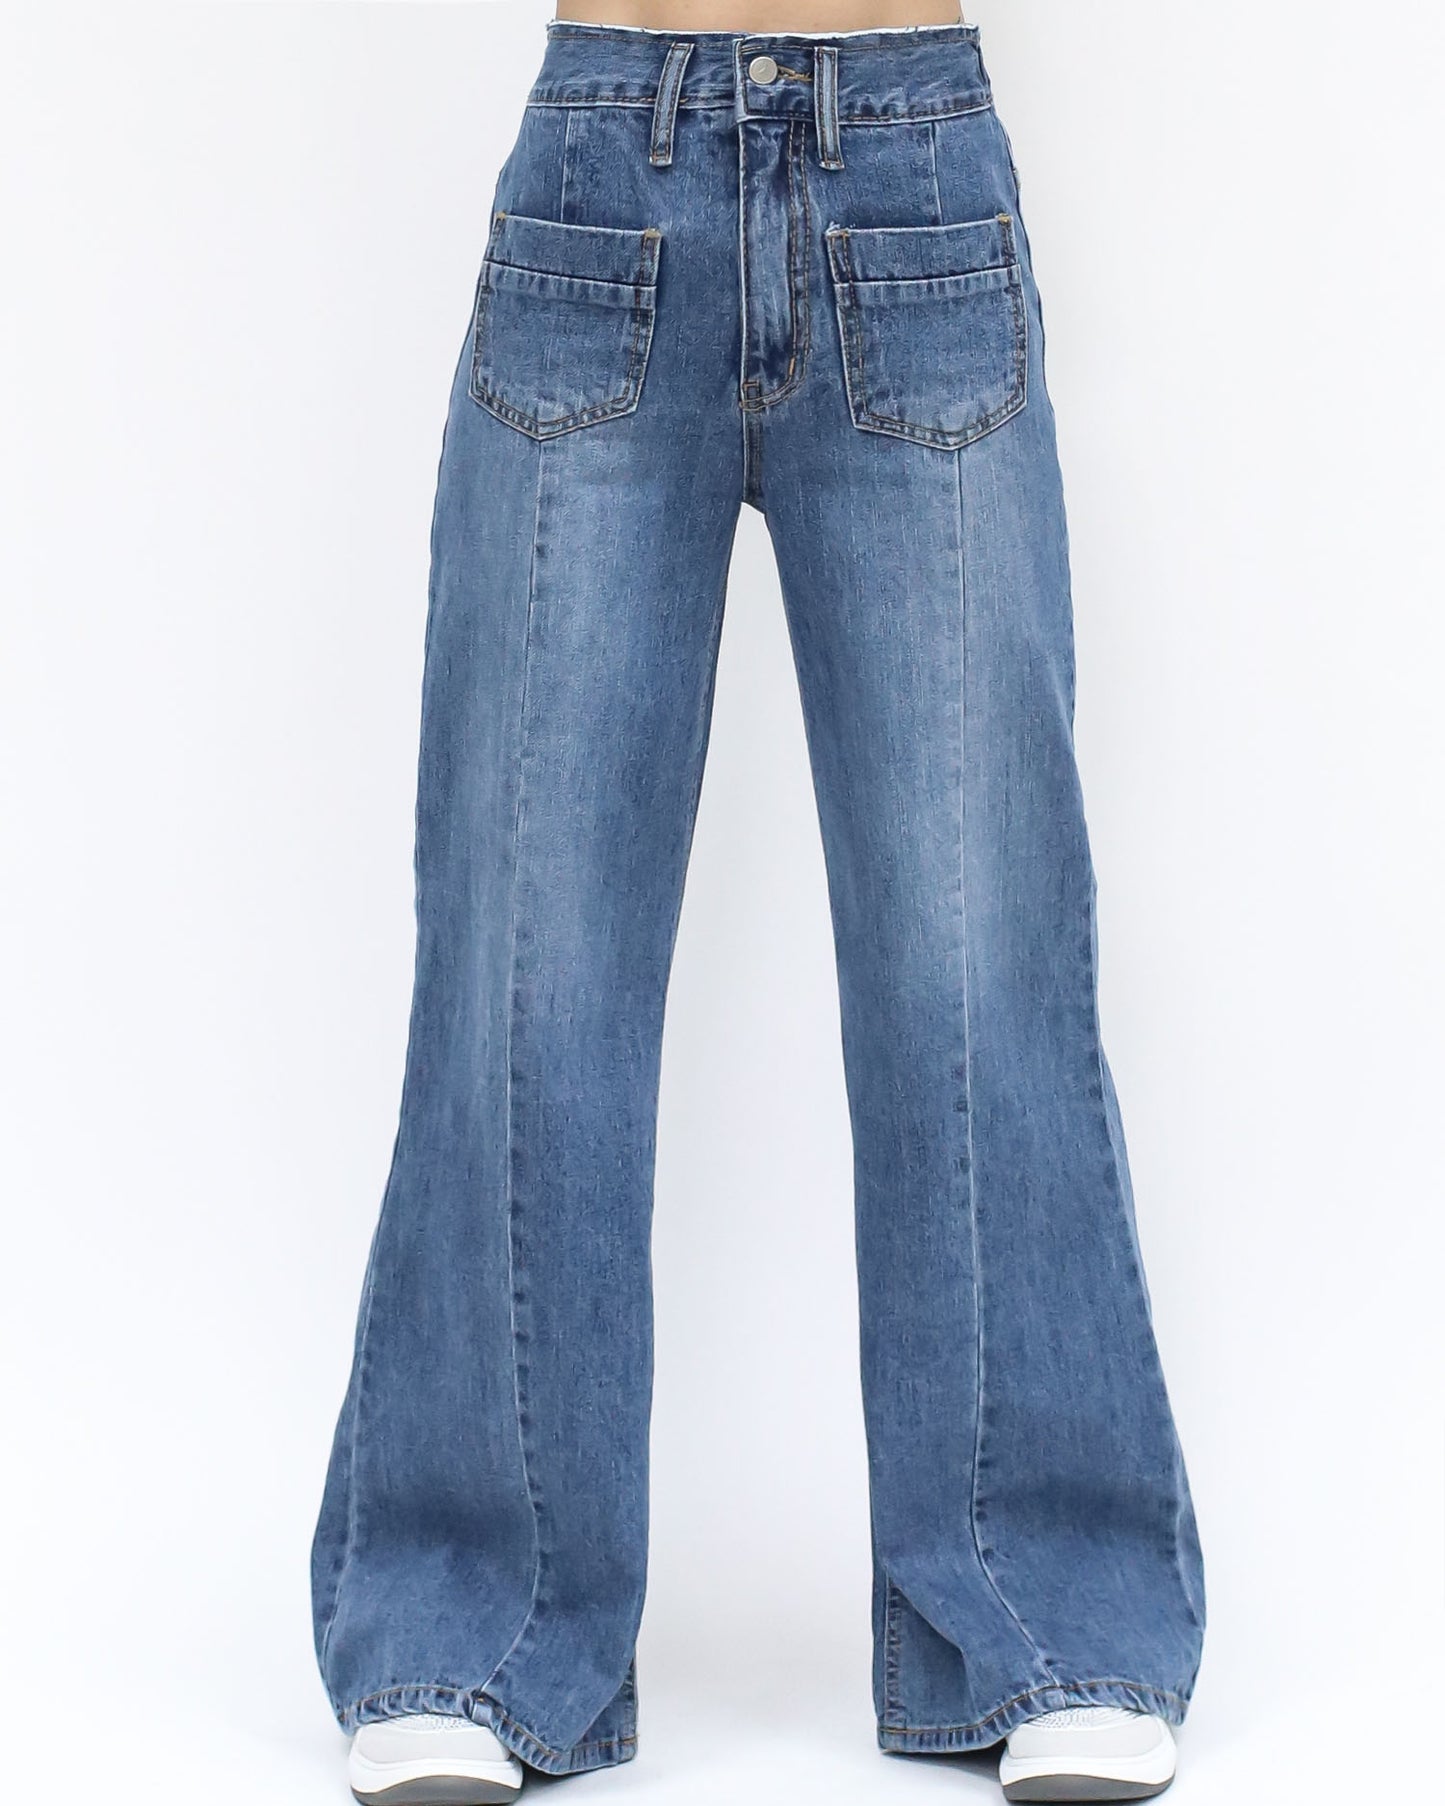 washed blue denim pocket front straight legs jeans *pre-order*